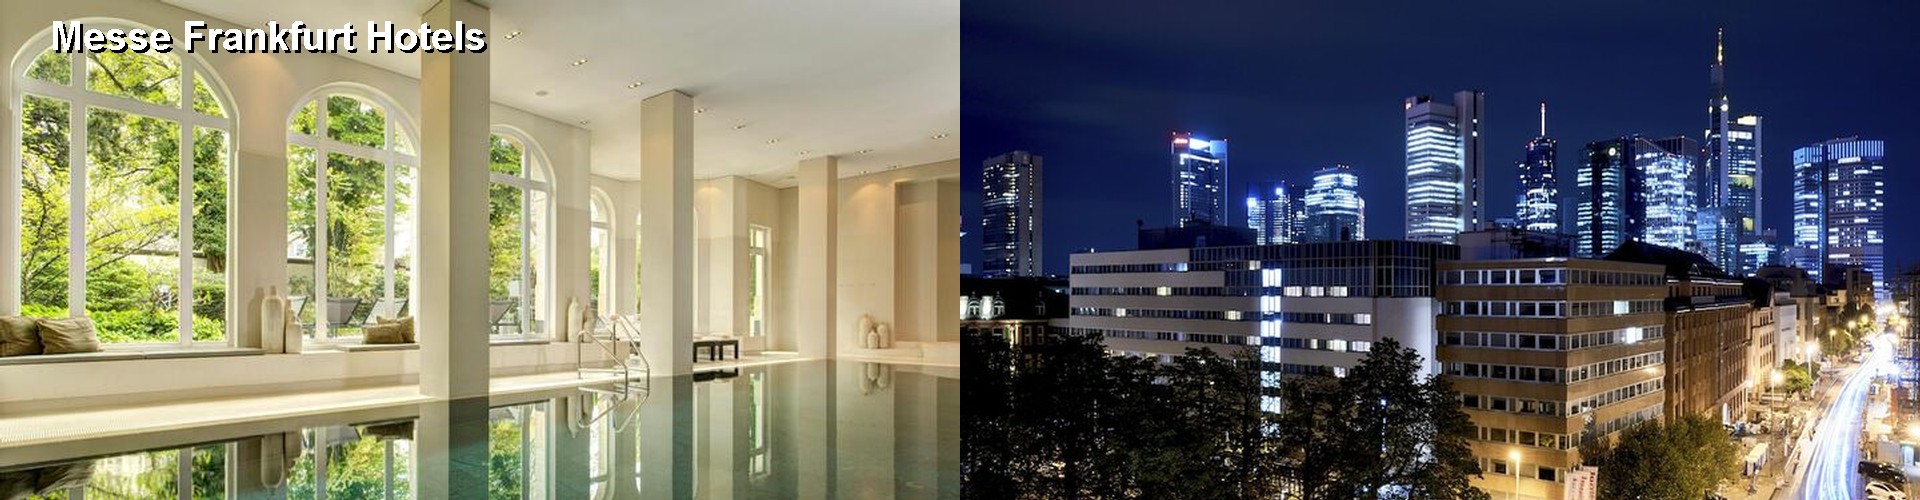 5 Best Hotels near Messe Frankfurt